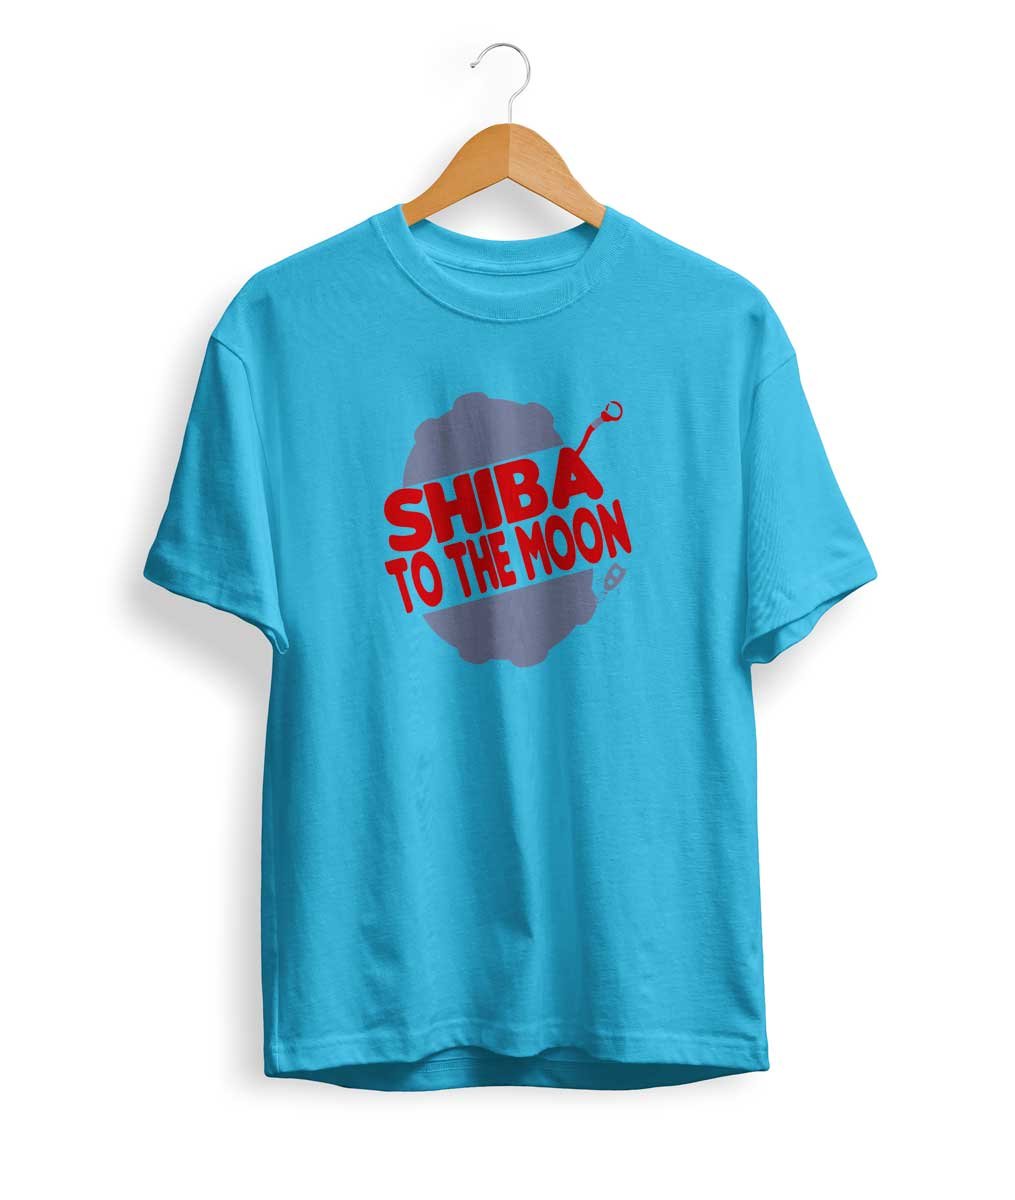 Shiba to the moon T Shirt